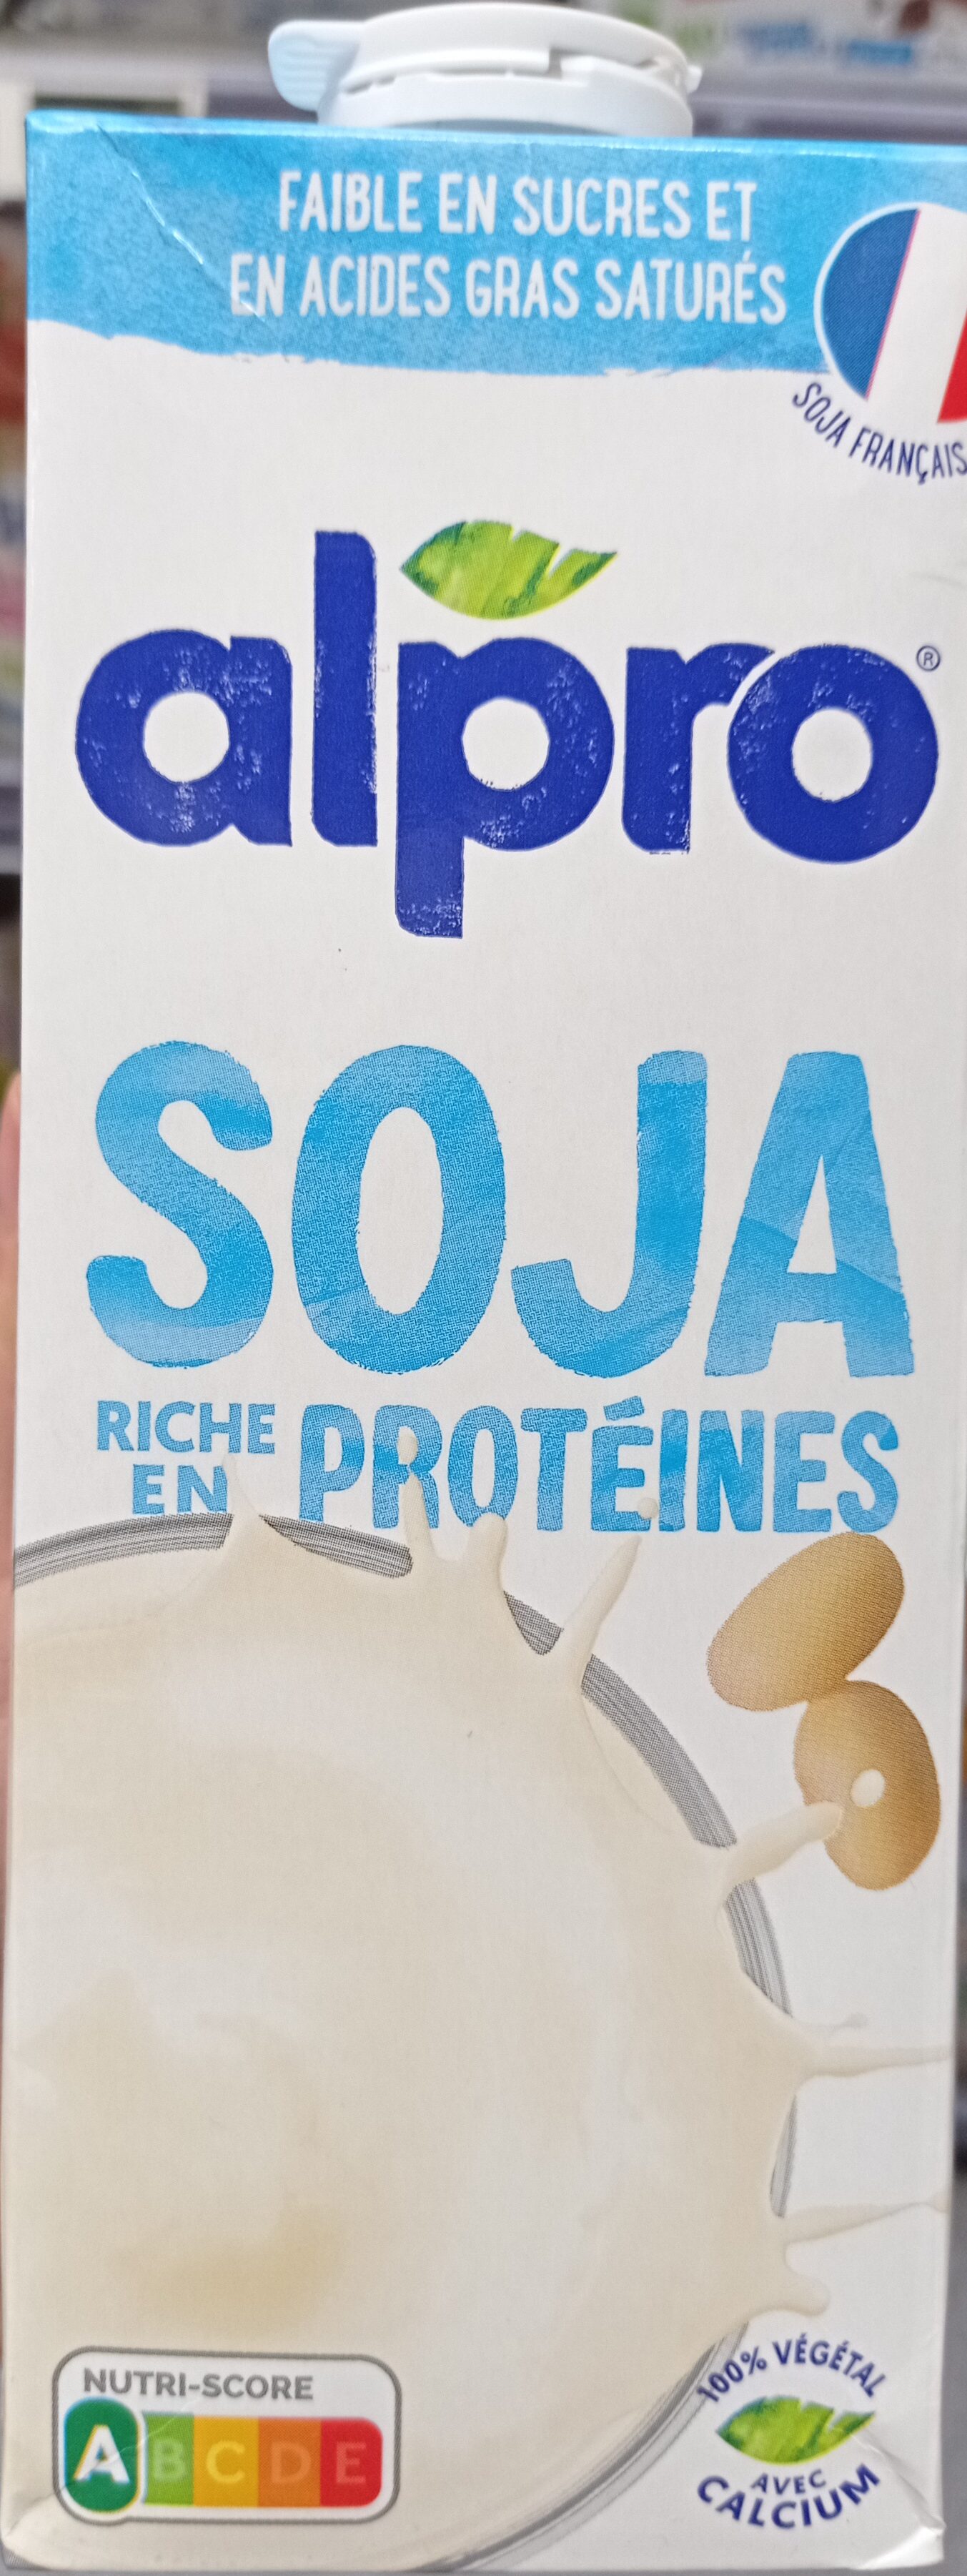 Soja riche en protéines - Produto - fr